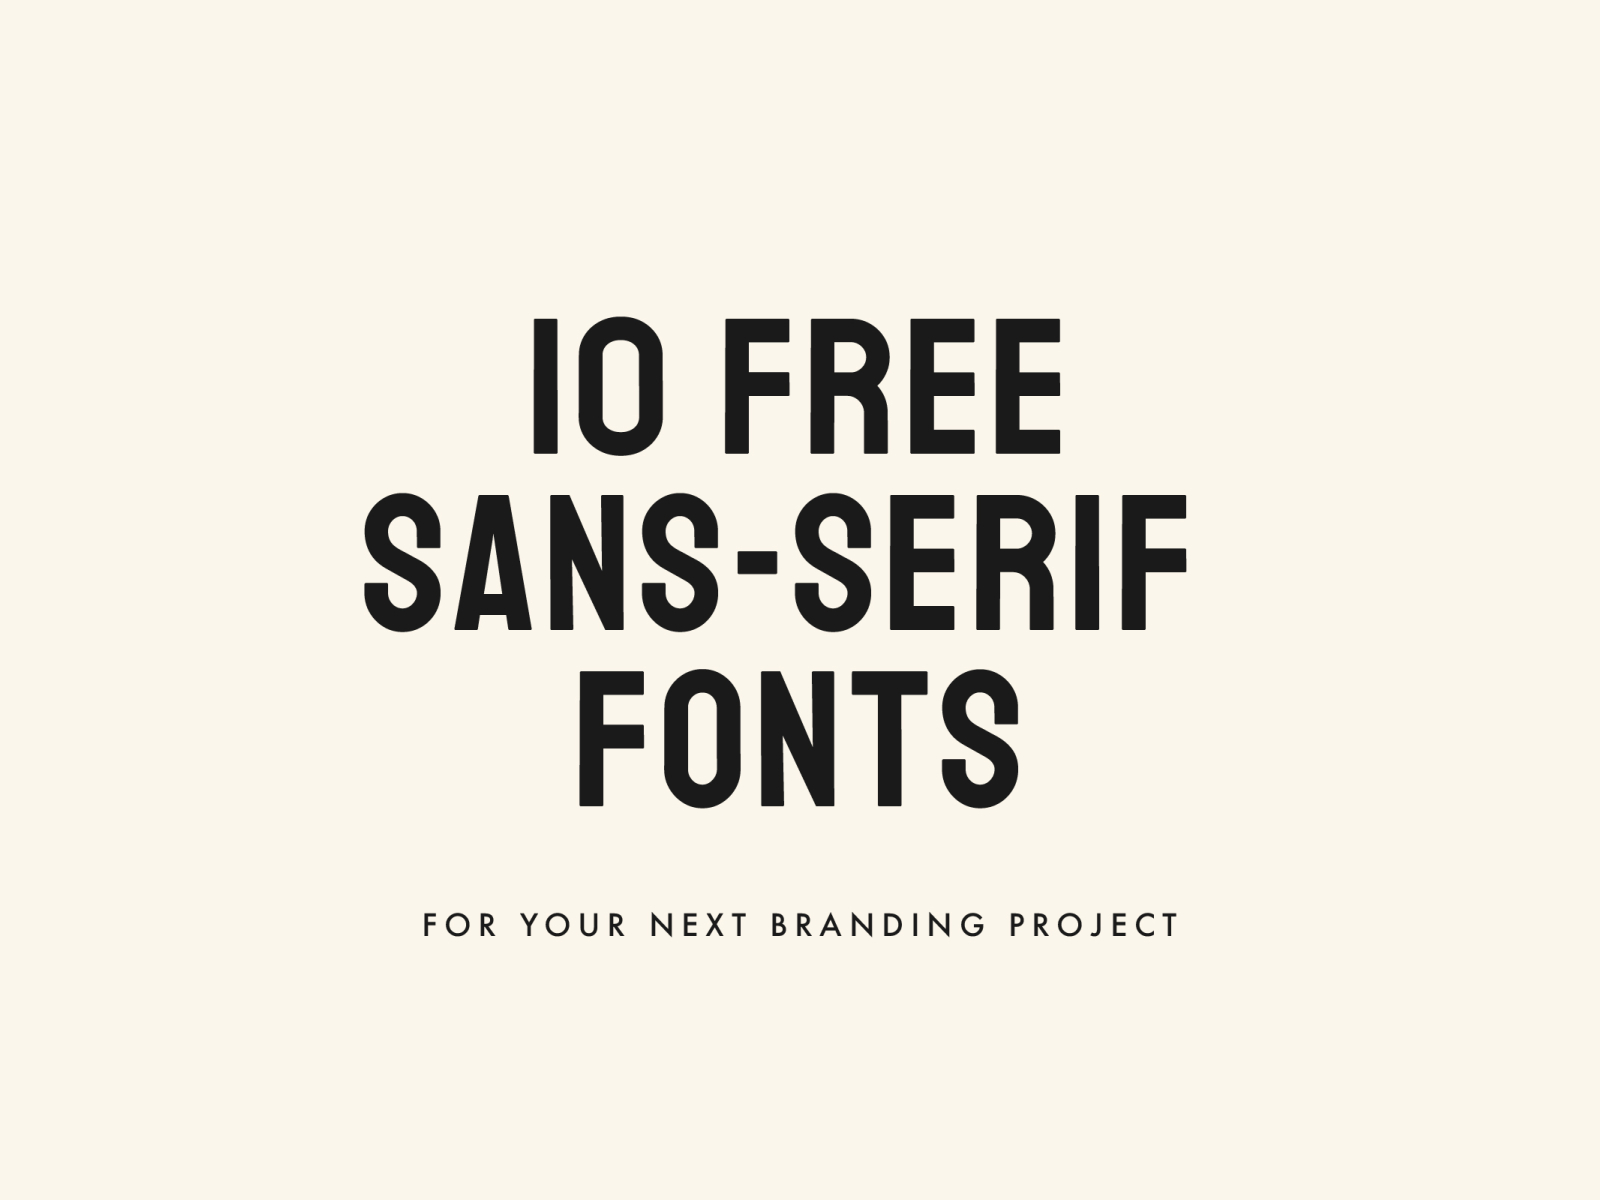 free sans serif fonts